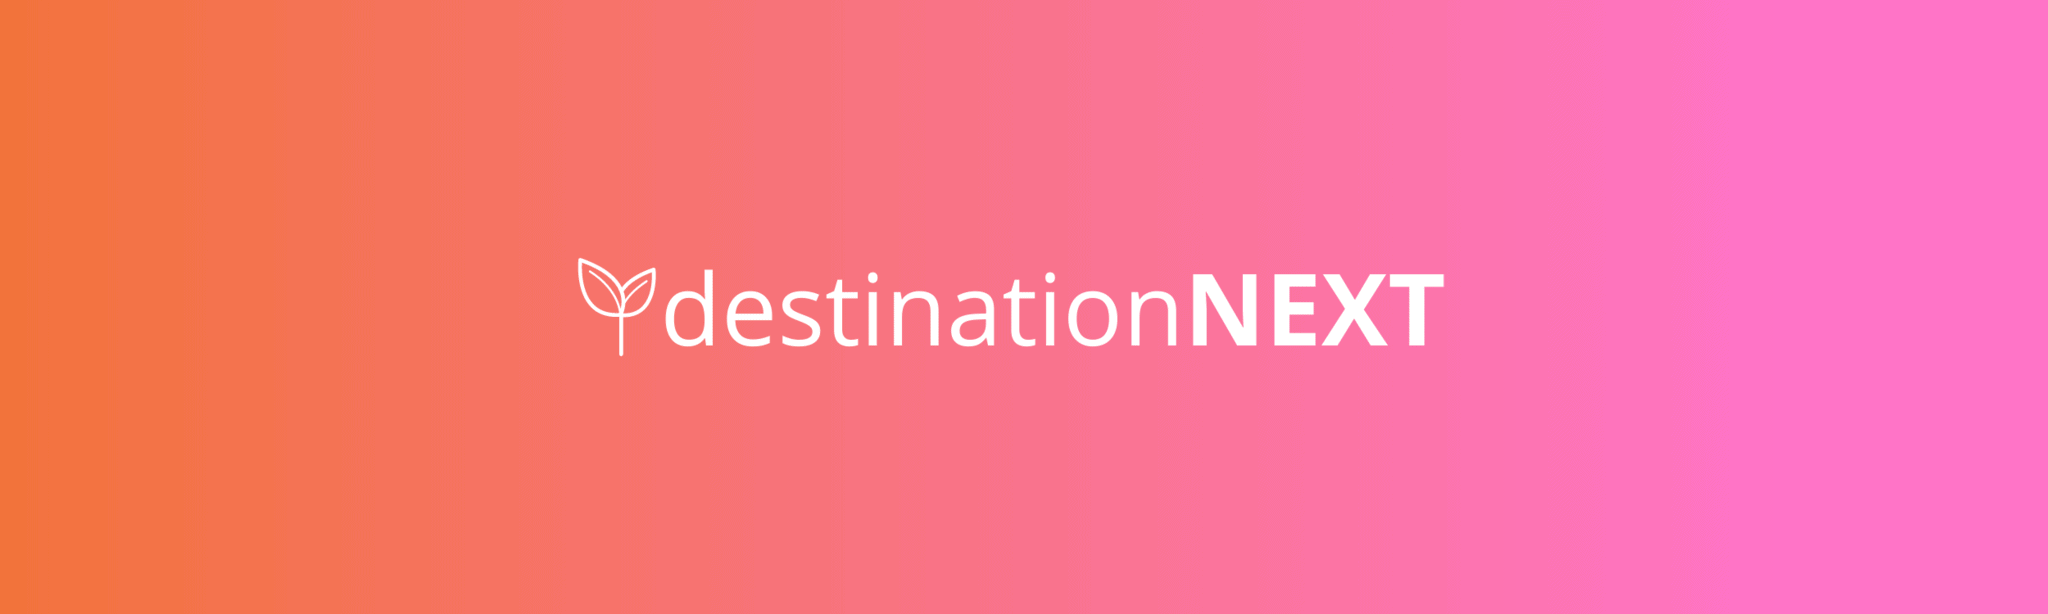 Destination Next Logo (2500 X 750 Px) (3)